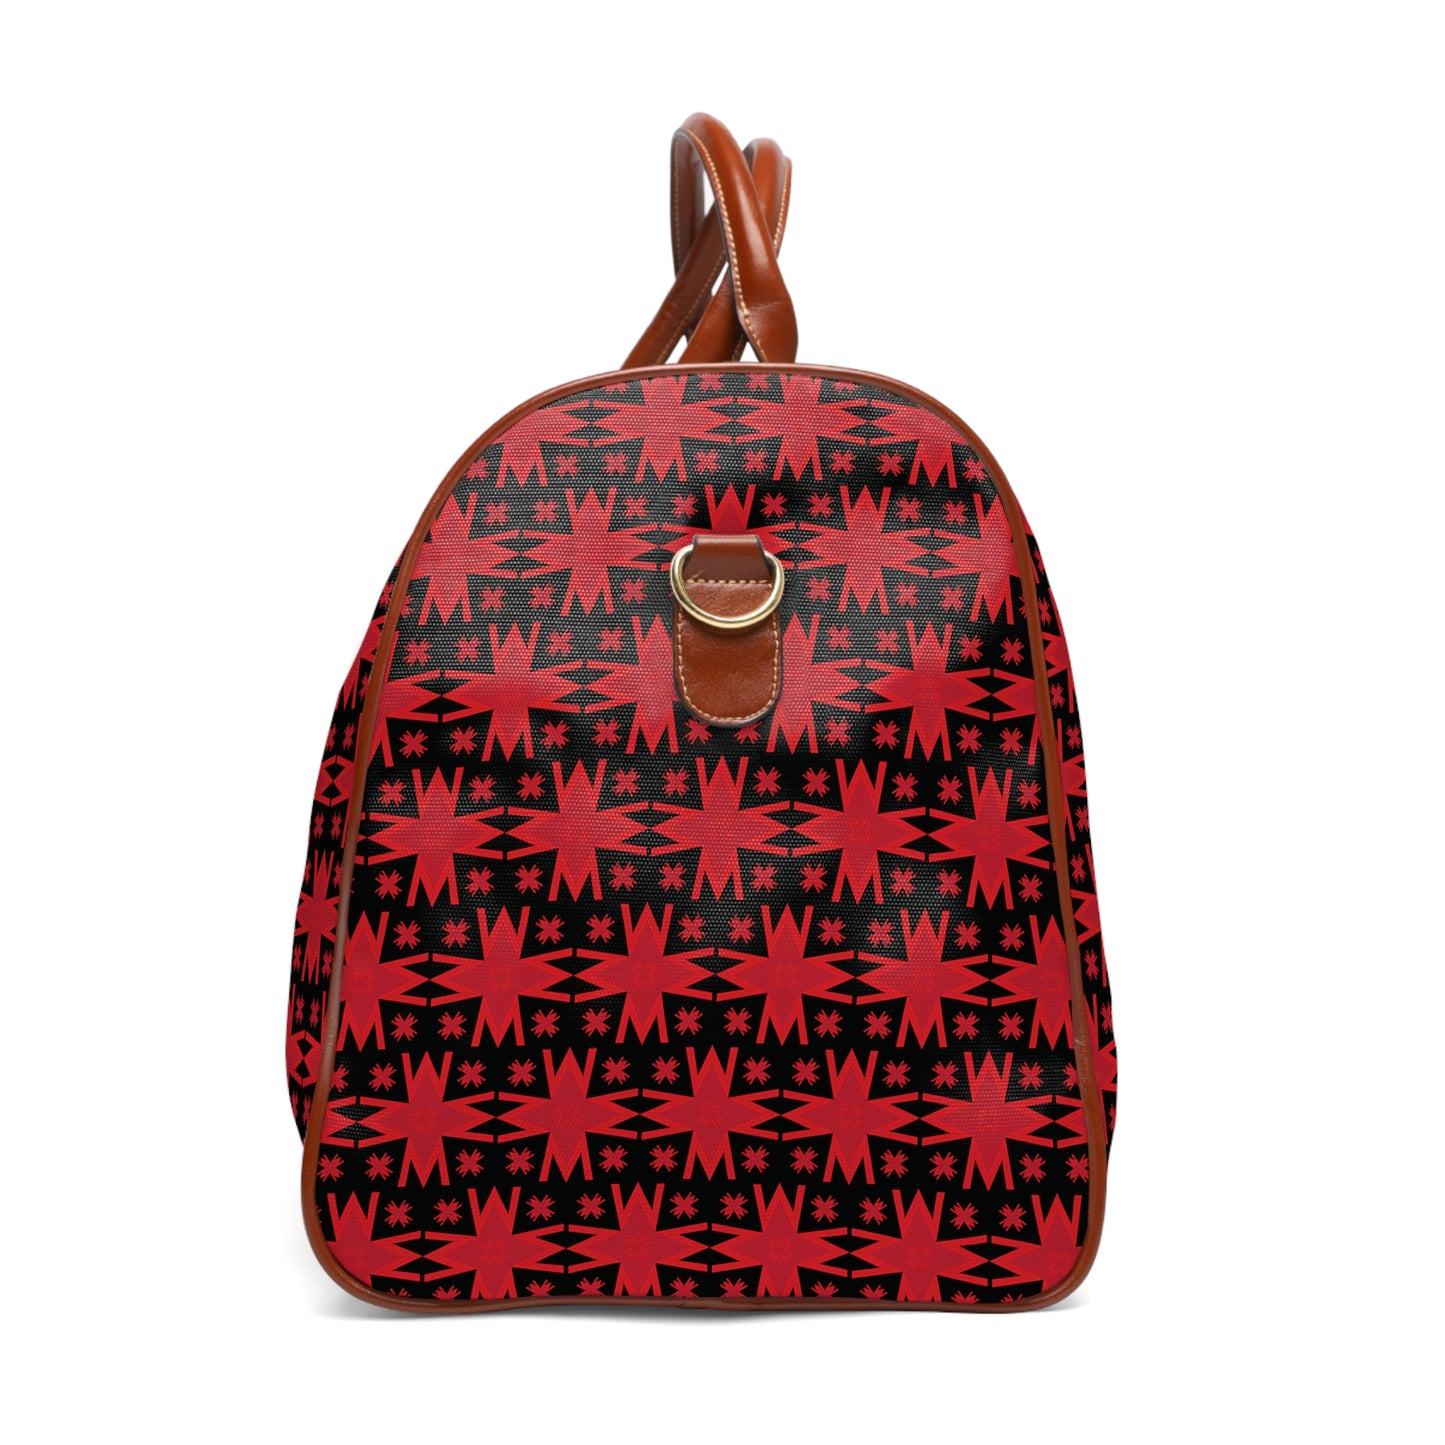 Letter Art - M - Red - Black 000000 - Waterproof Travel Bag